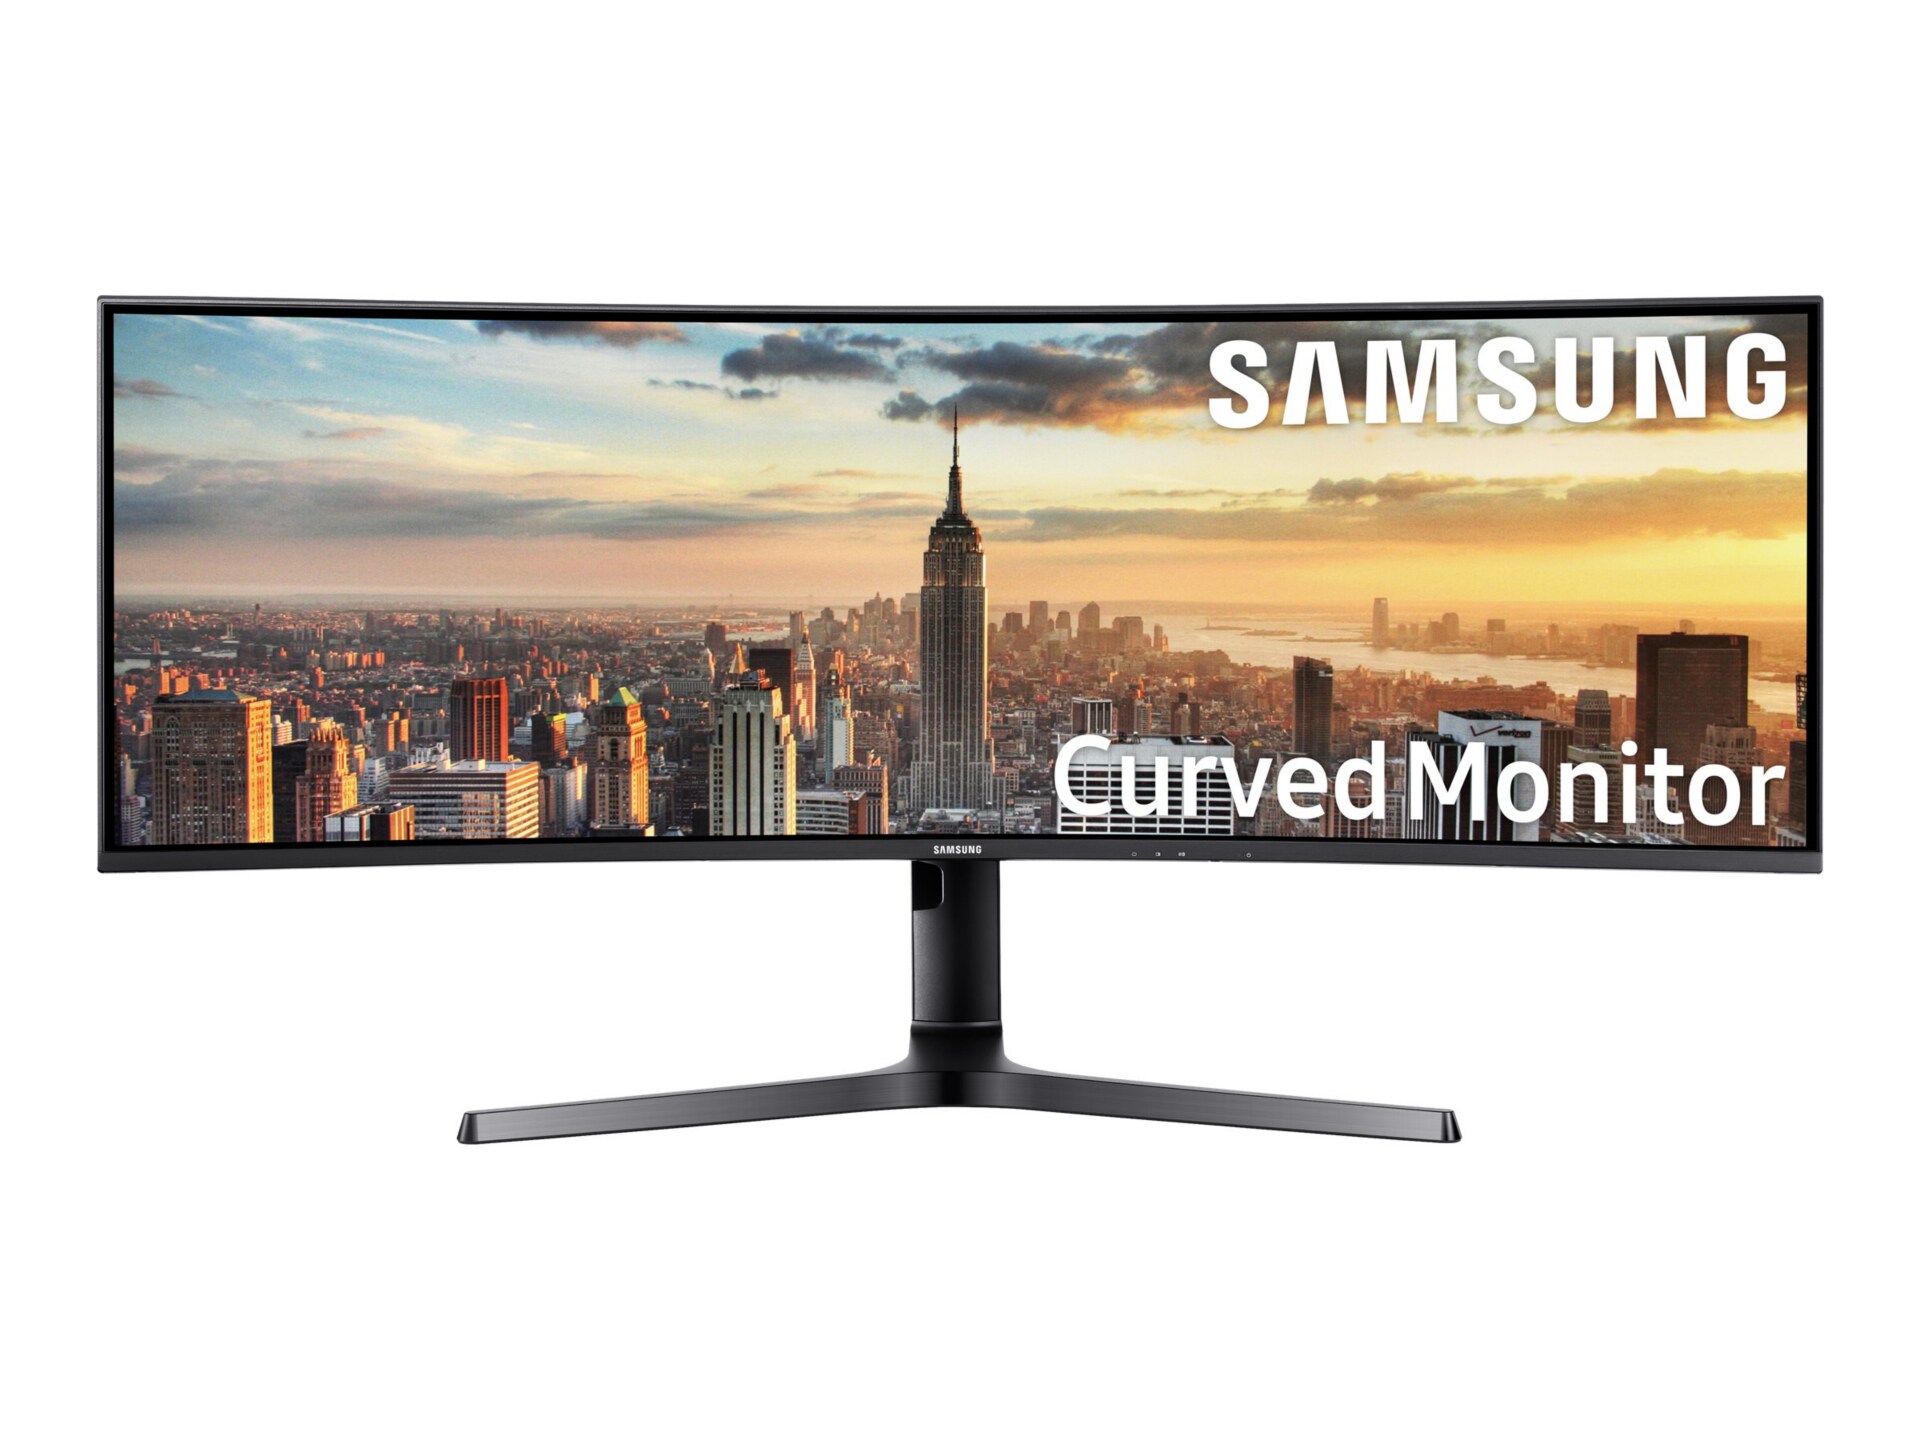 Samsung C43J890DKN - CJ89 Series - LED monitor - curved - 43.4"